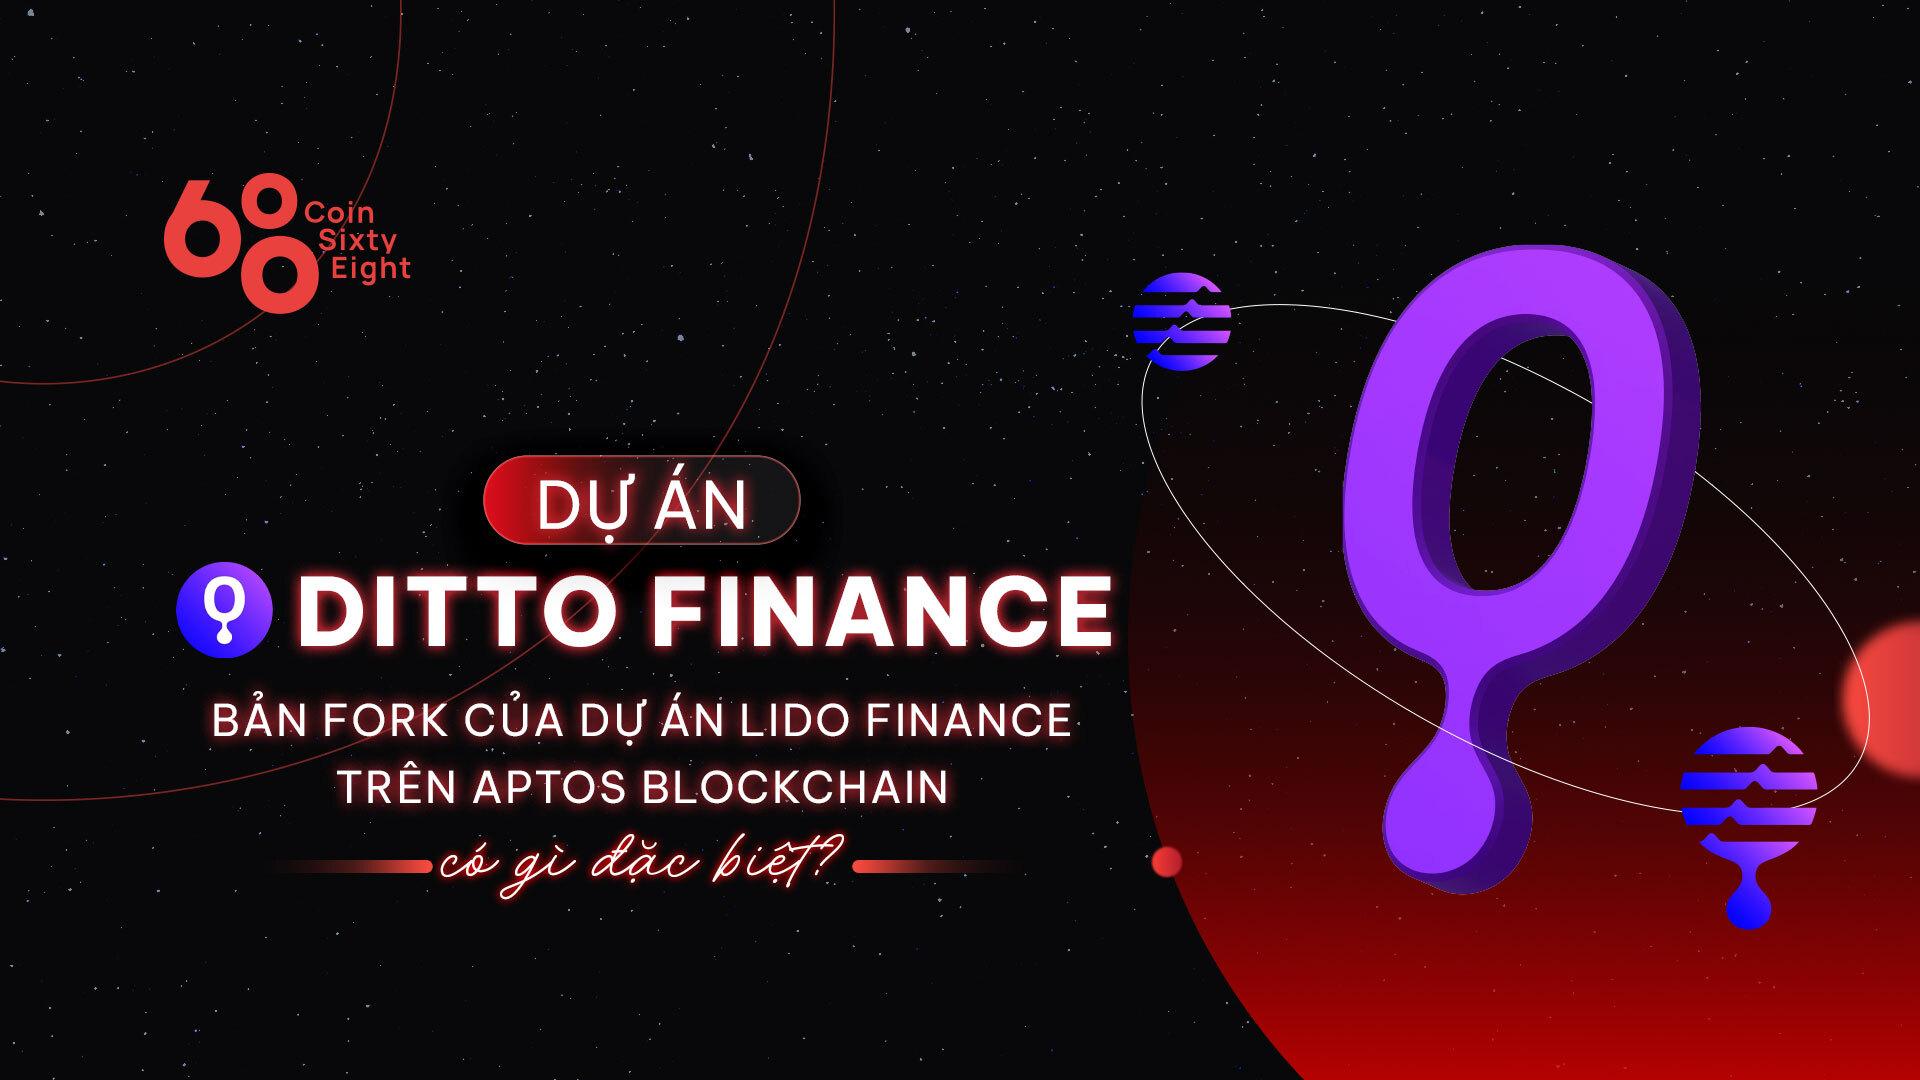 du-an-ditto-finance-ban-fork-cua-du-an-lido-finance-tren-aptos-blockchain-co-gi-dac-biet